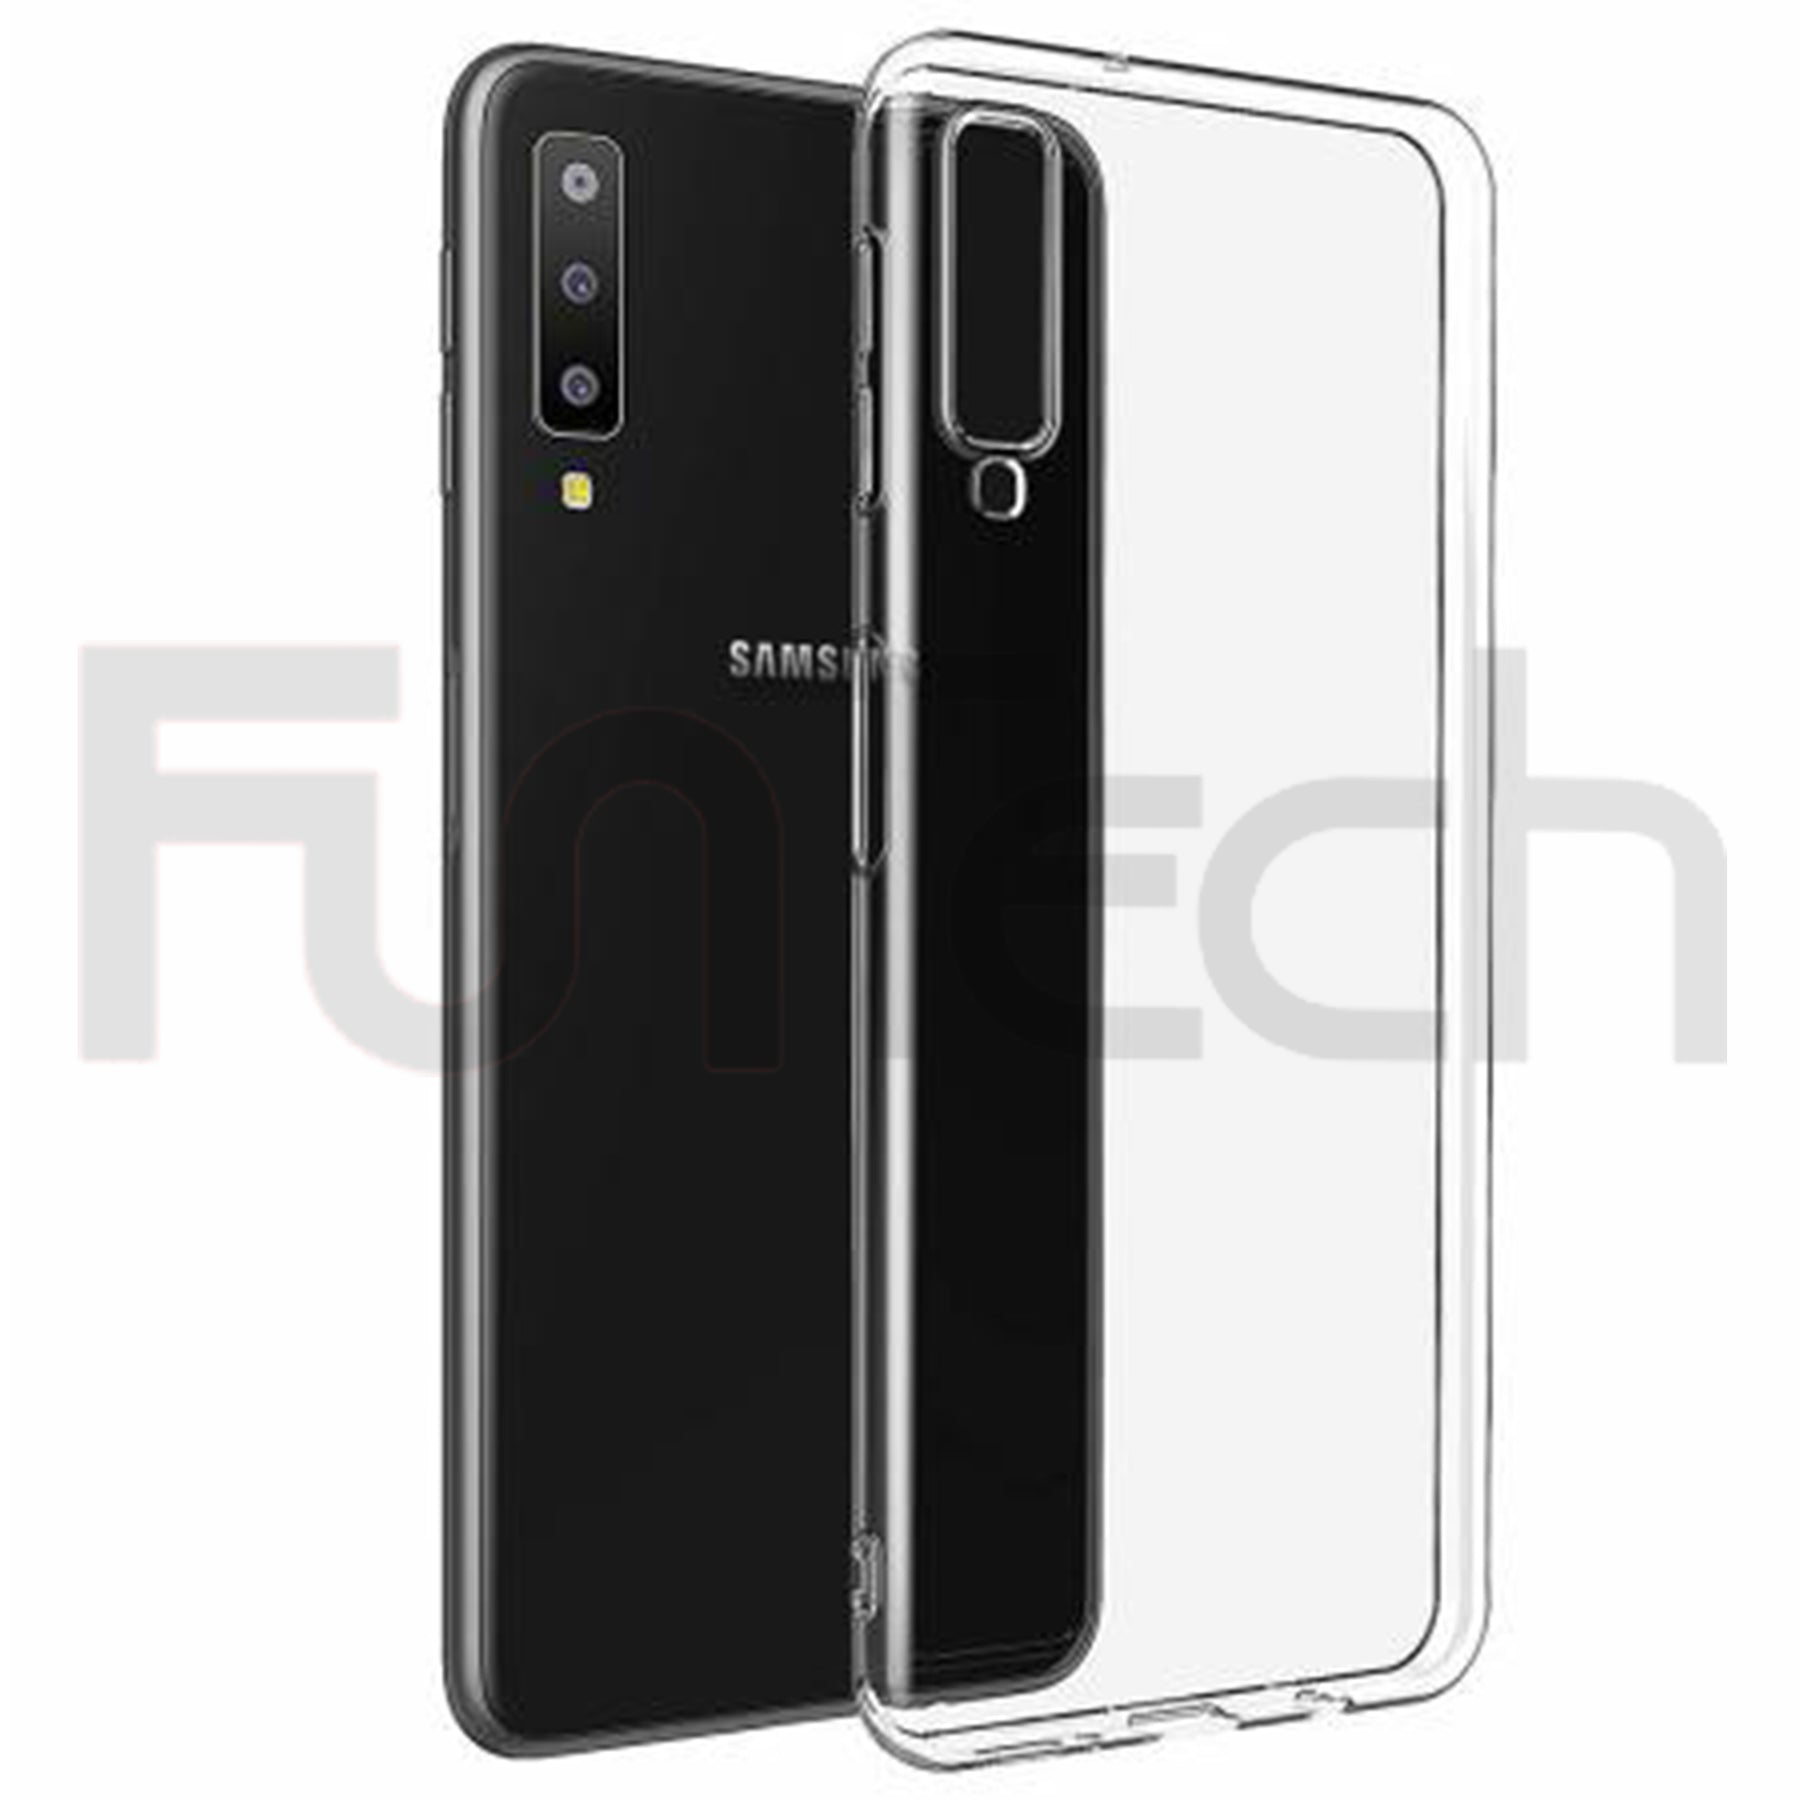 Samsung A7 2018, Transparent Phone Case,